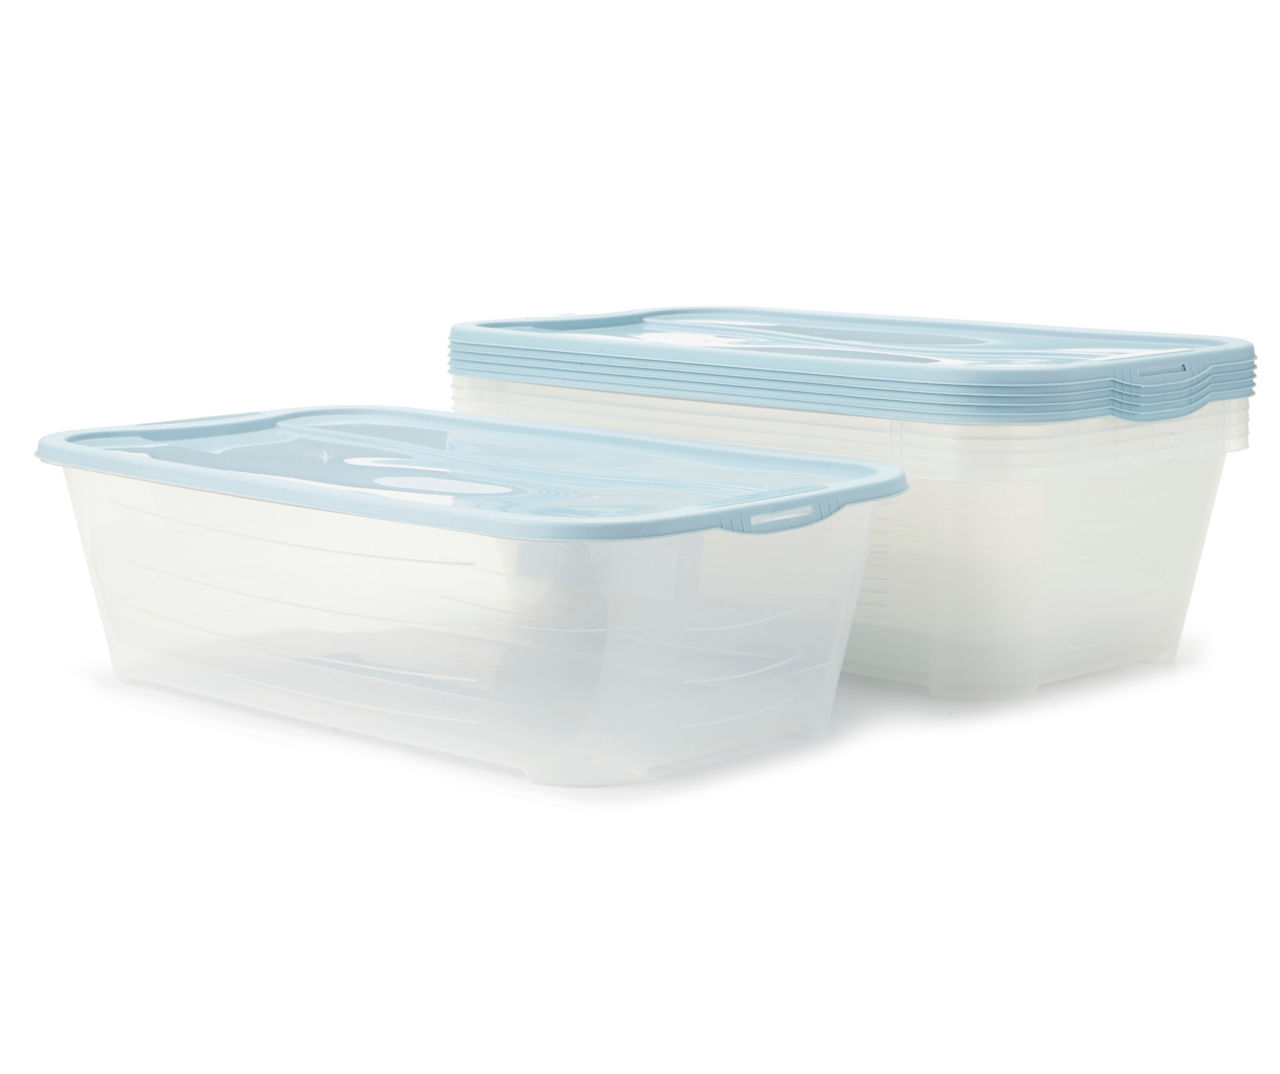 6qt Clear Storage Box White - Room Essentials™ : Target